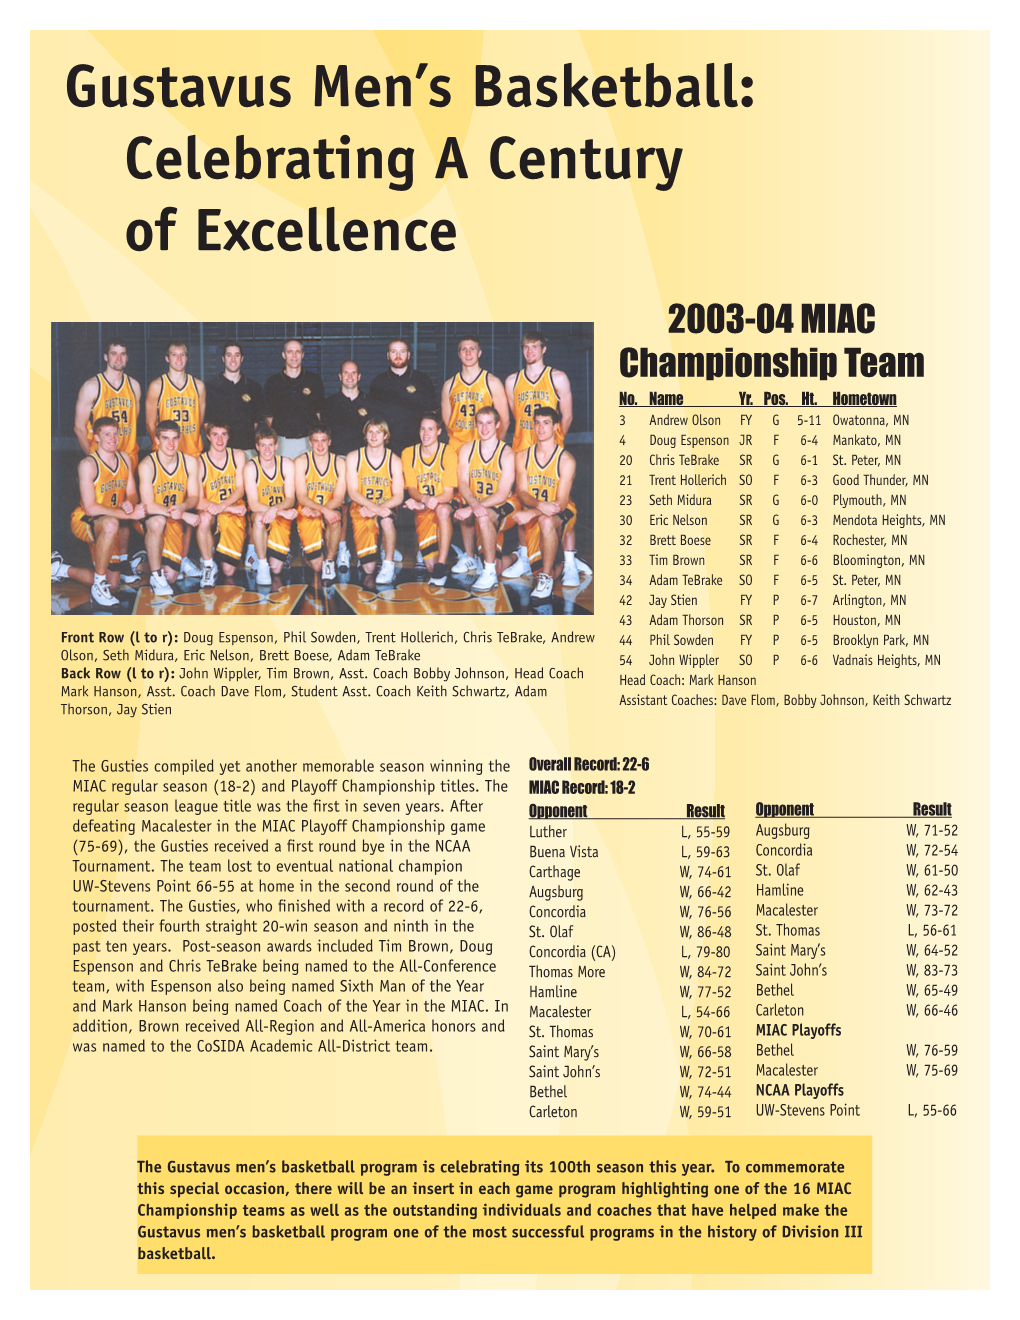 Gustavus Men's Basketball: Celebrating a Century of Excellence